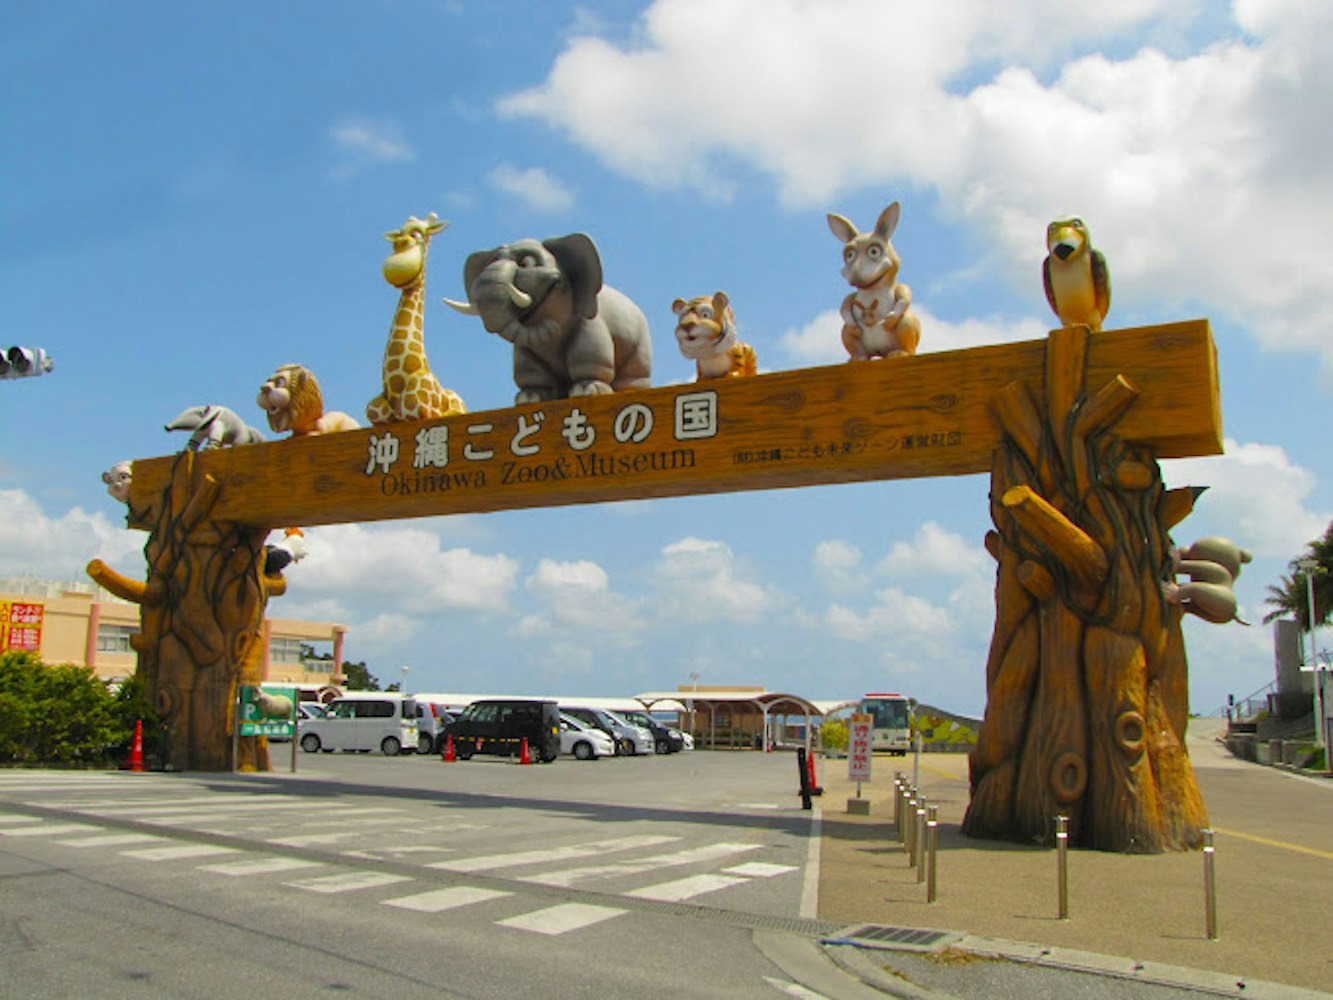 Okinawa Zoo and Museum